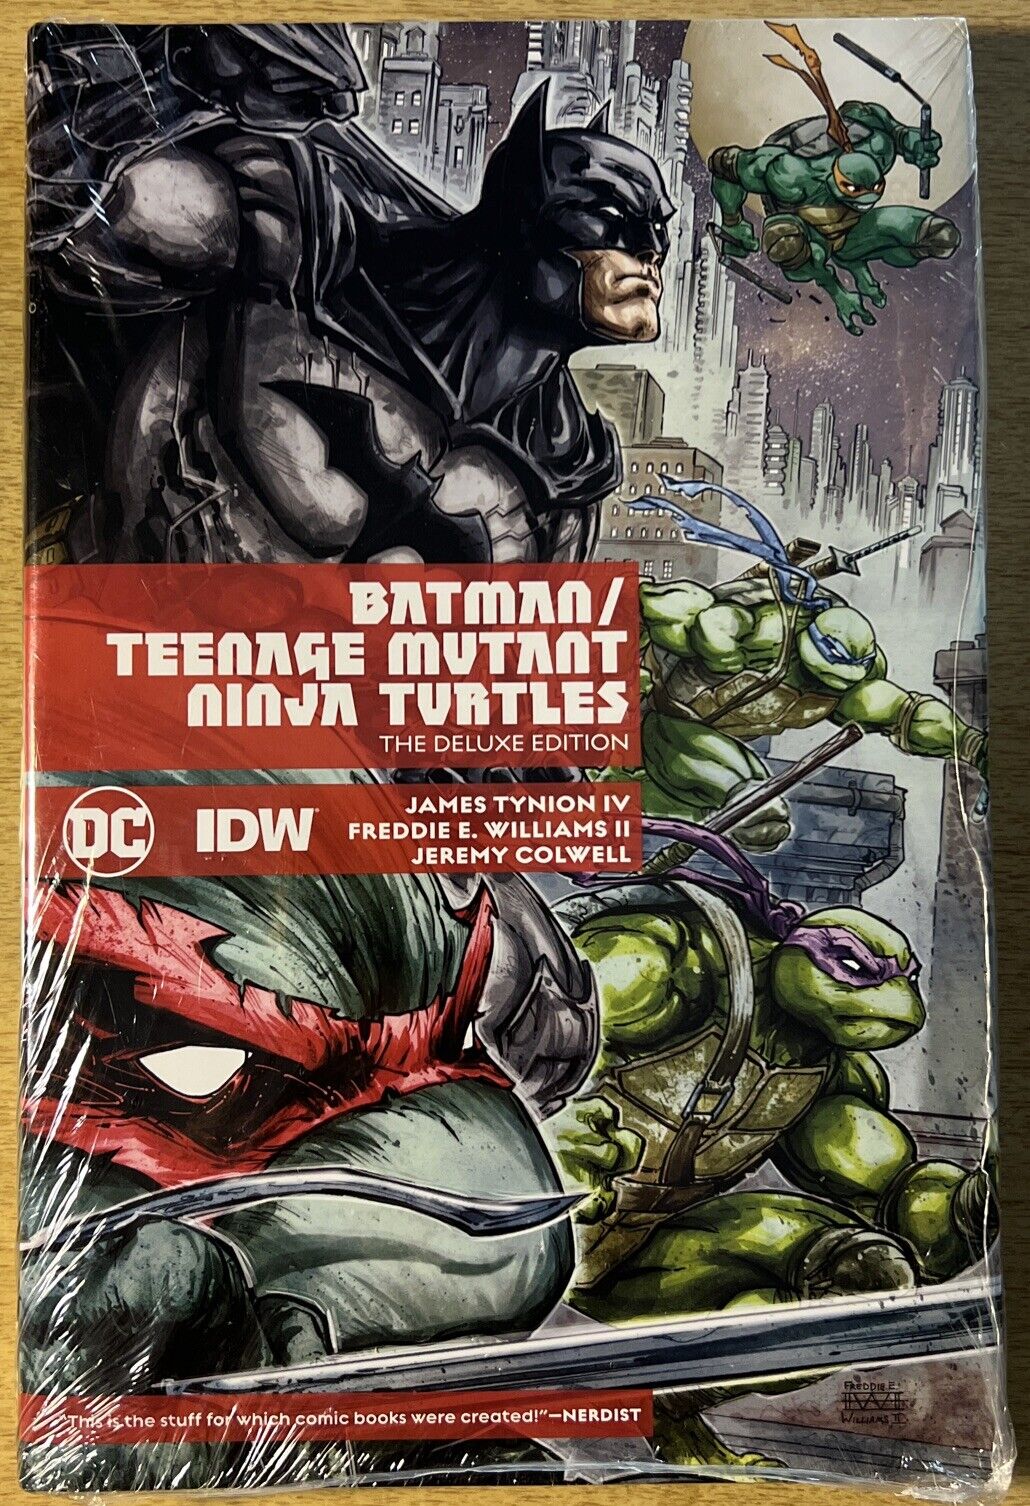 Batman/Teenage Mutant Ninja Turtles - Deluxe Edition - Hardcover - Sealed